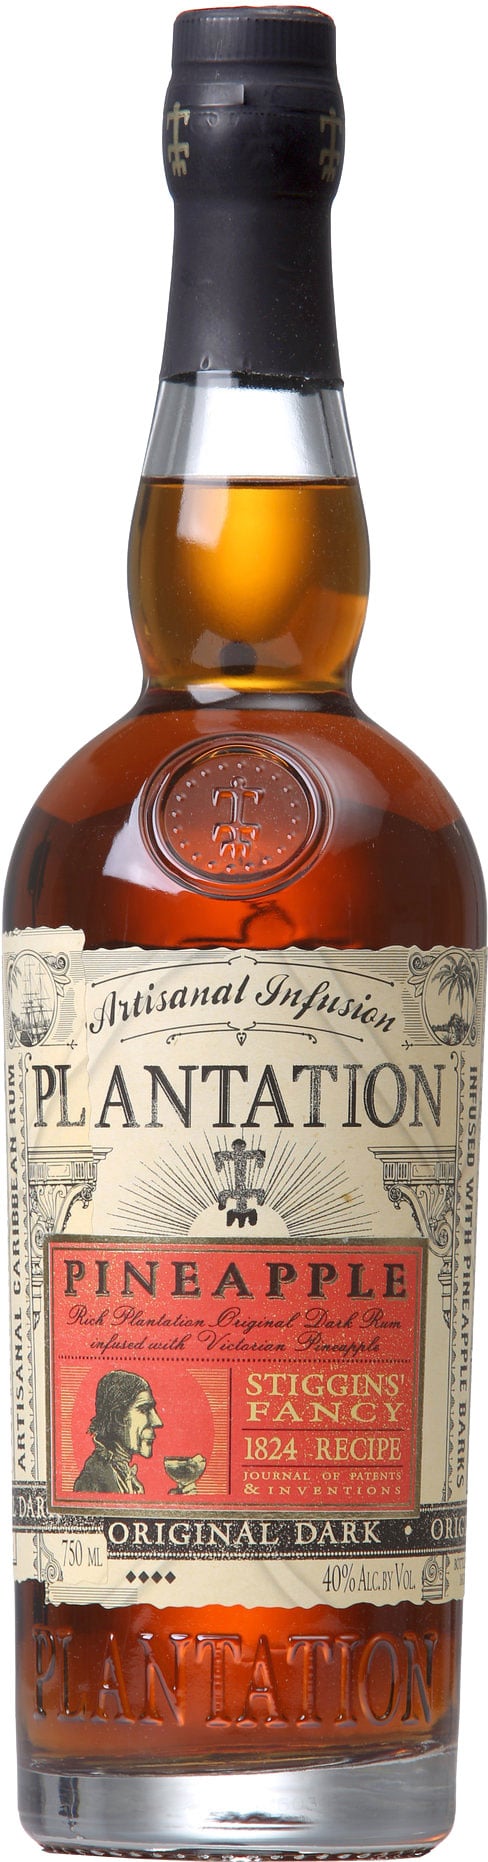 Plantation Stiggins Fancy Dark Pineapple Rum